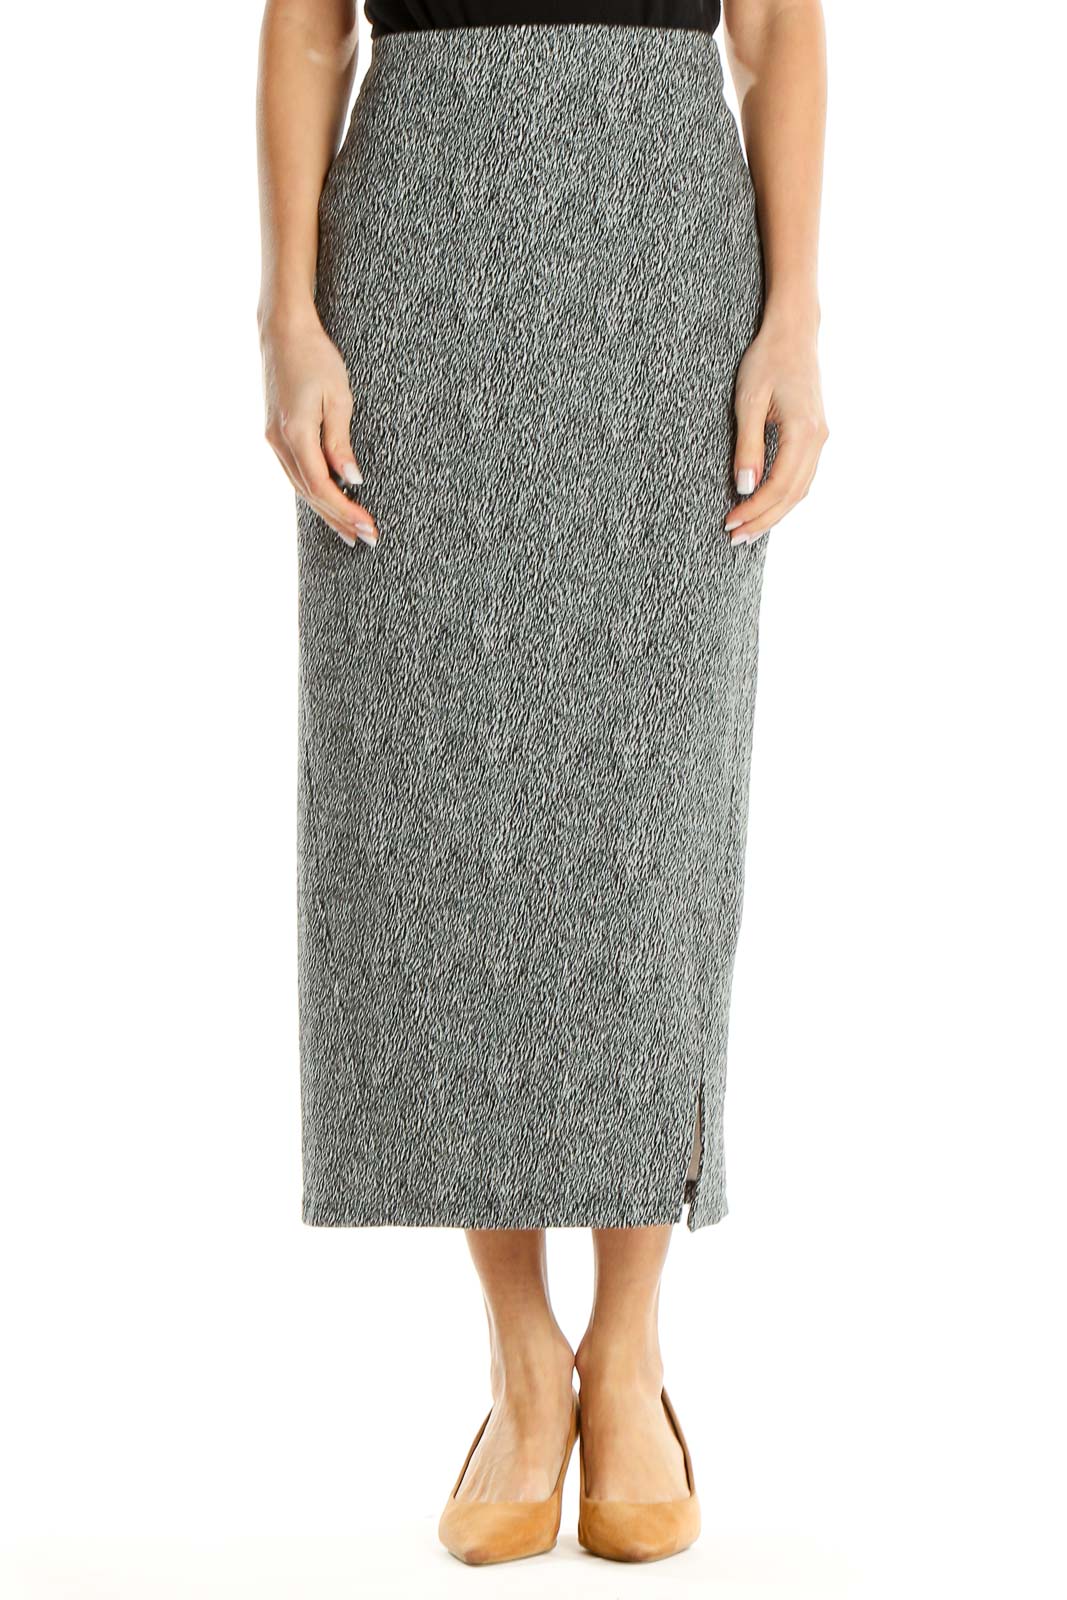 Gray Printed Casual Midi Pencil Skirt Front